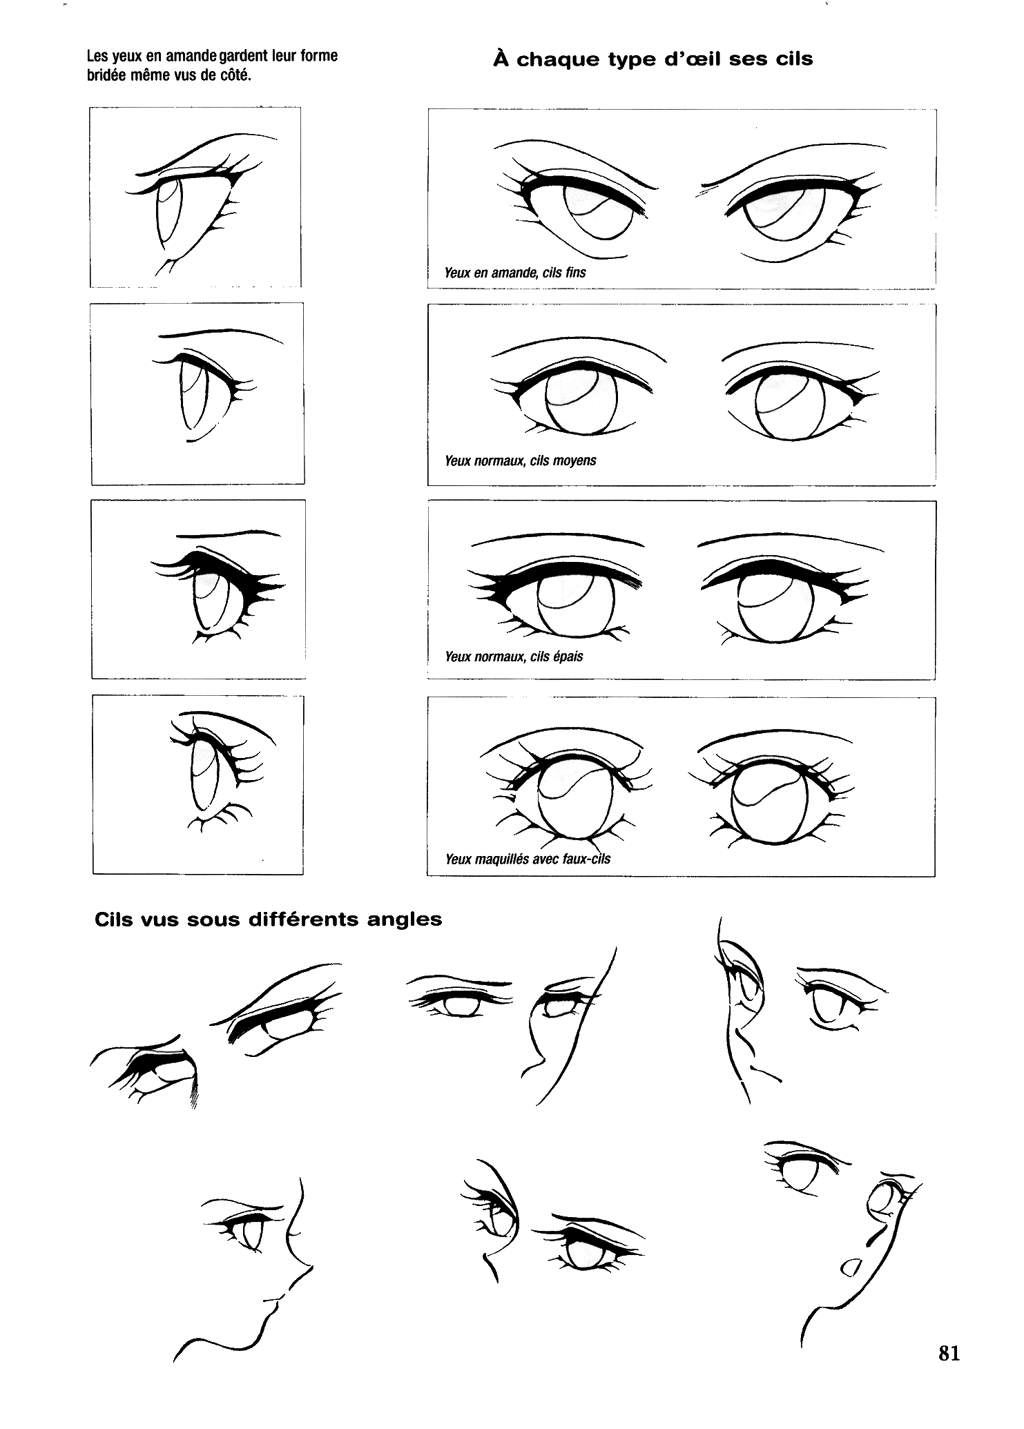 Le dessin du Manga 04 - Personnages feminin, Attitudes, Expressions numero d'image 81